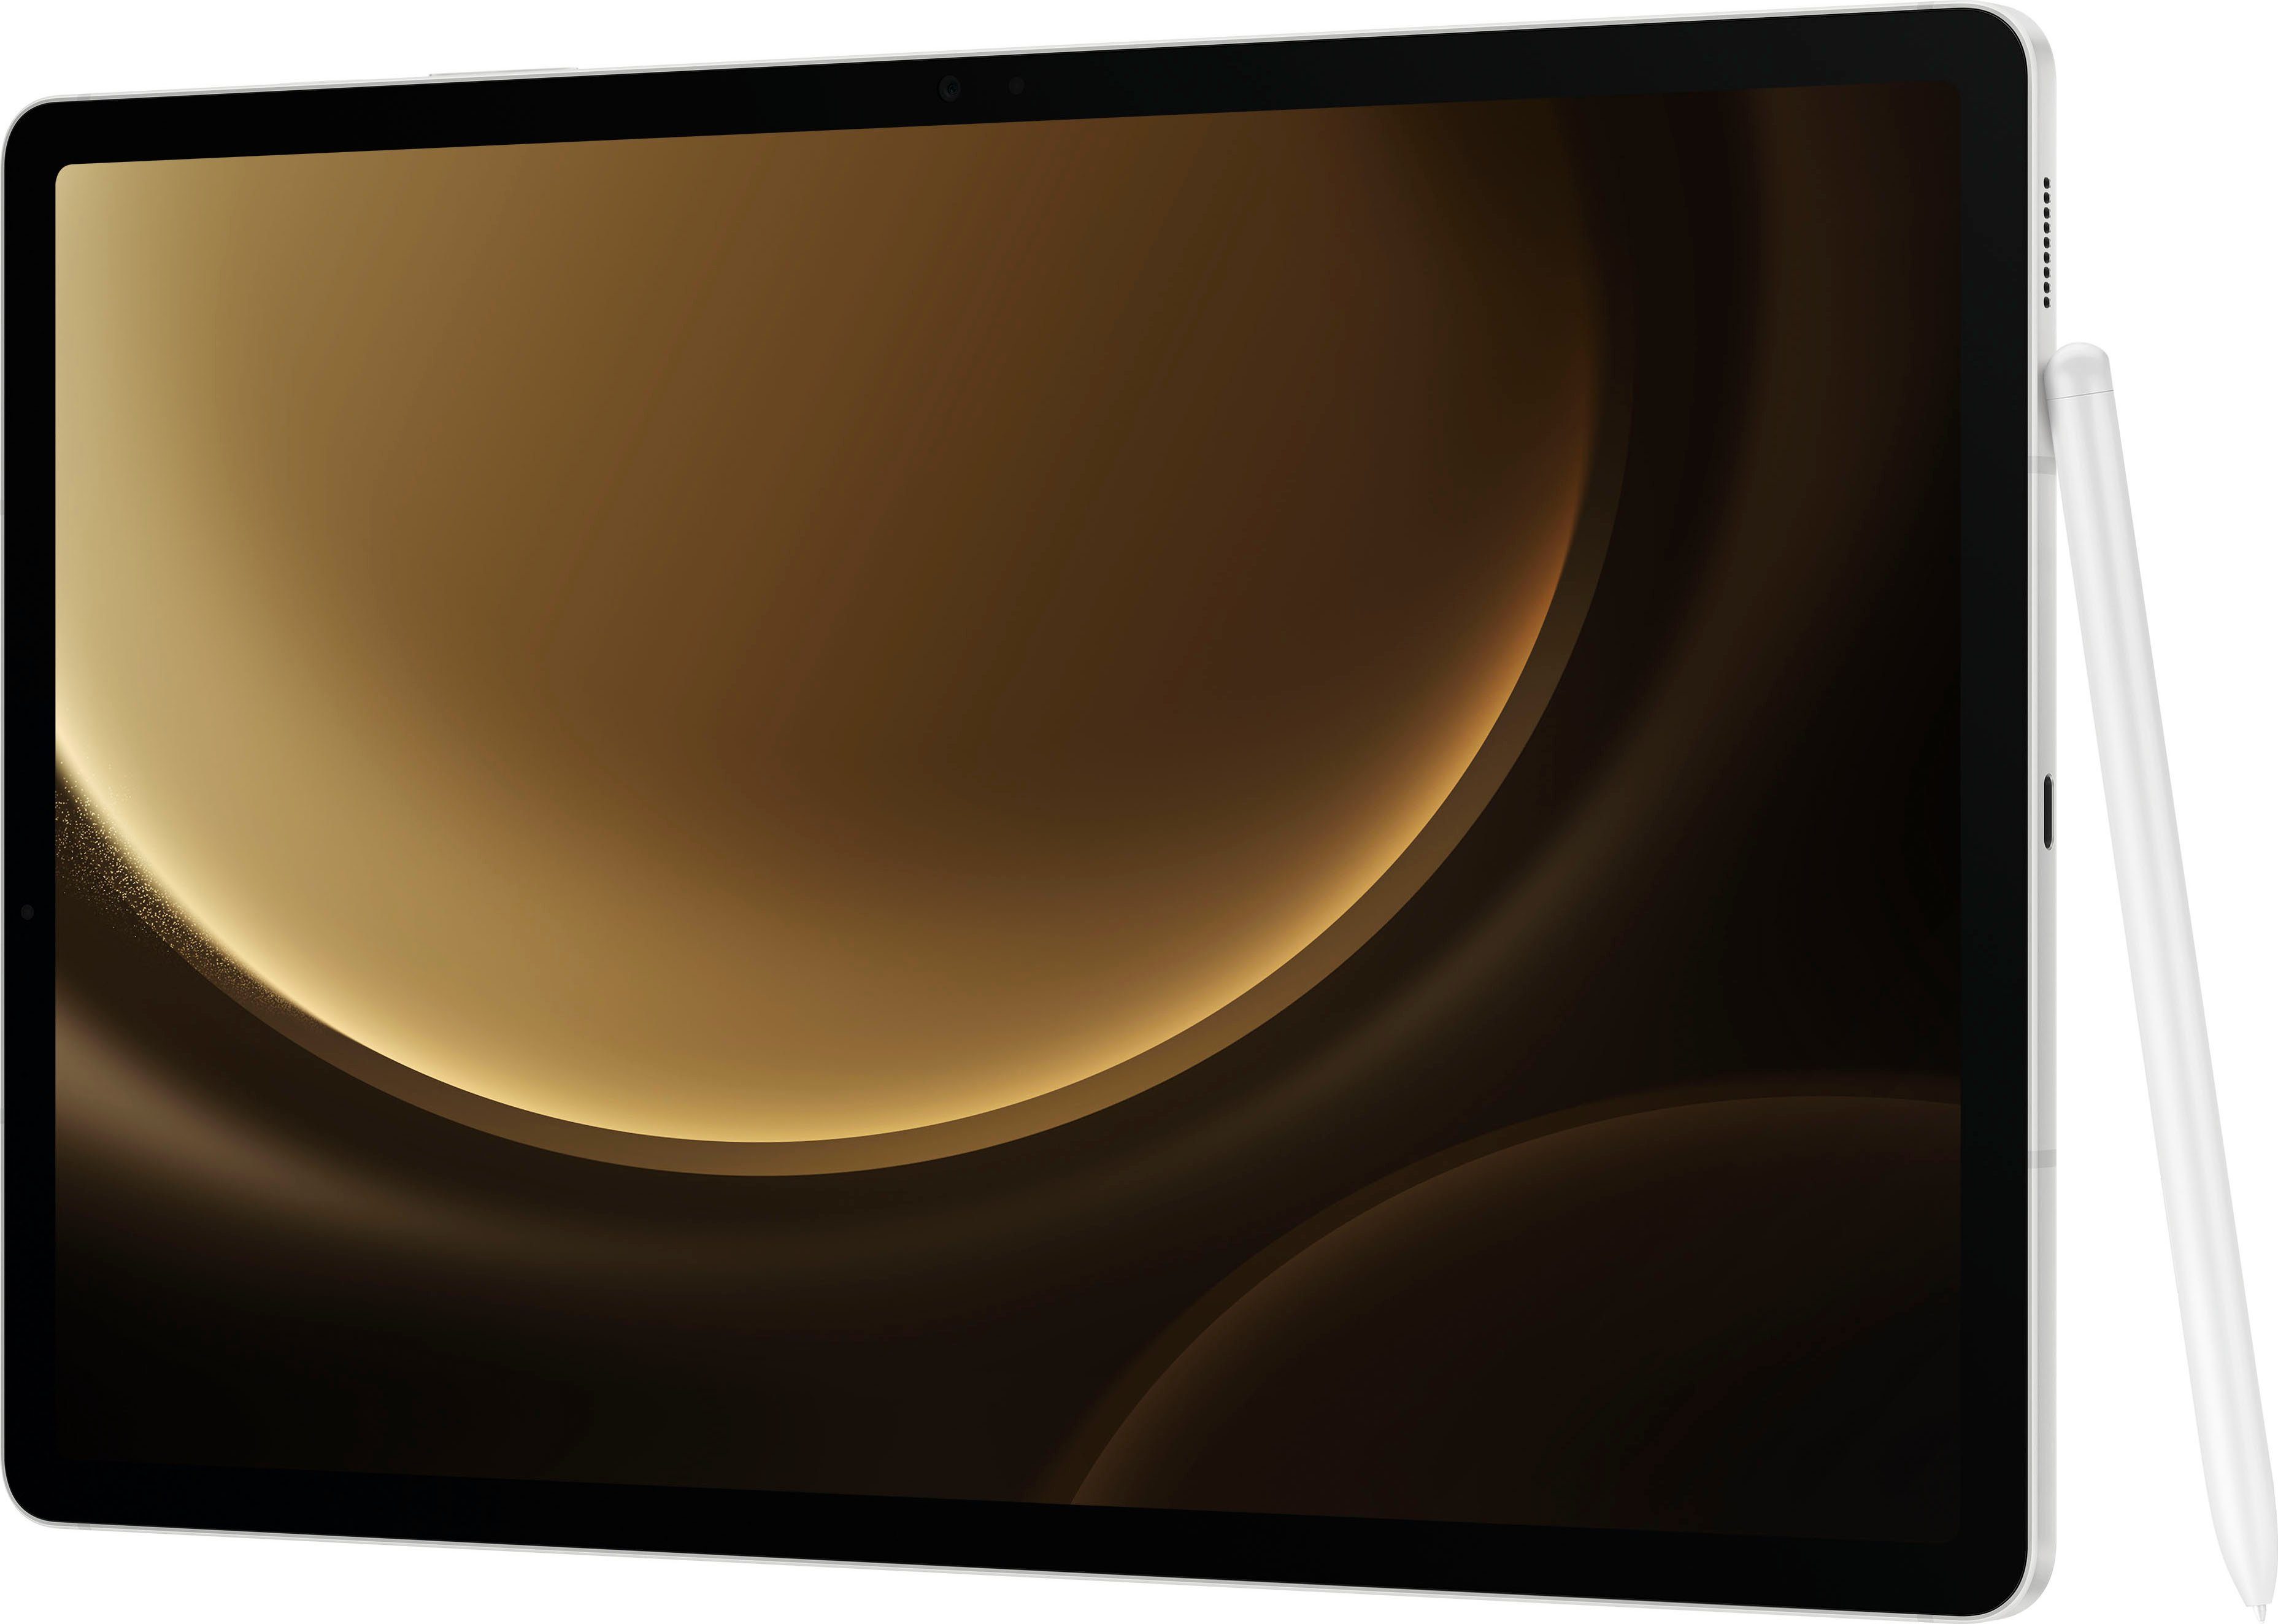 128 FE+ Samsung UI,Knox) S9 silver Android,One GB, Tab Galaxy Tablet (12,4",